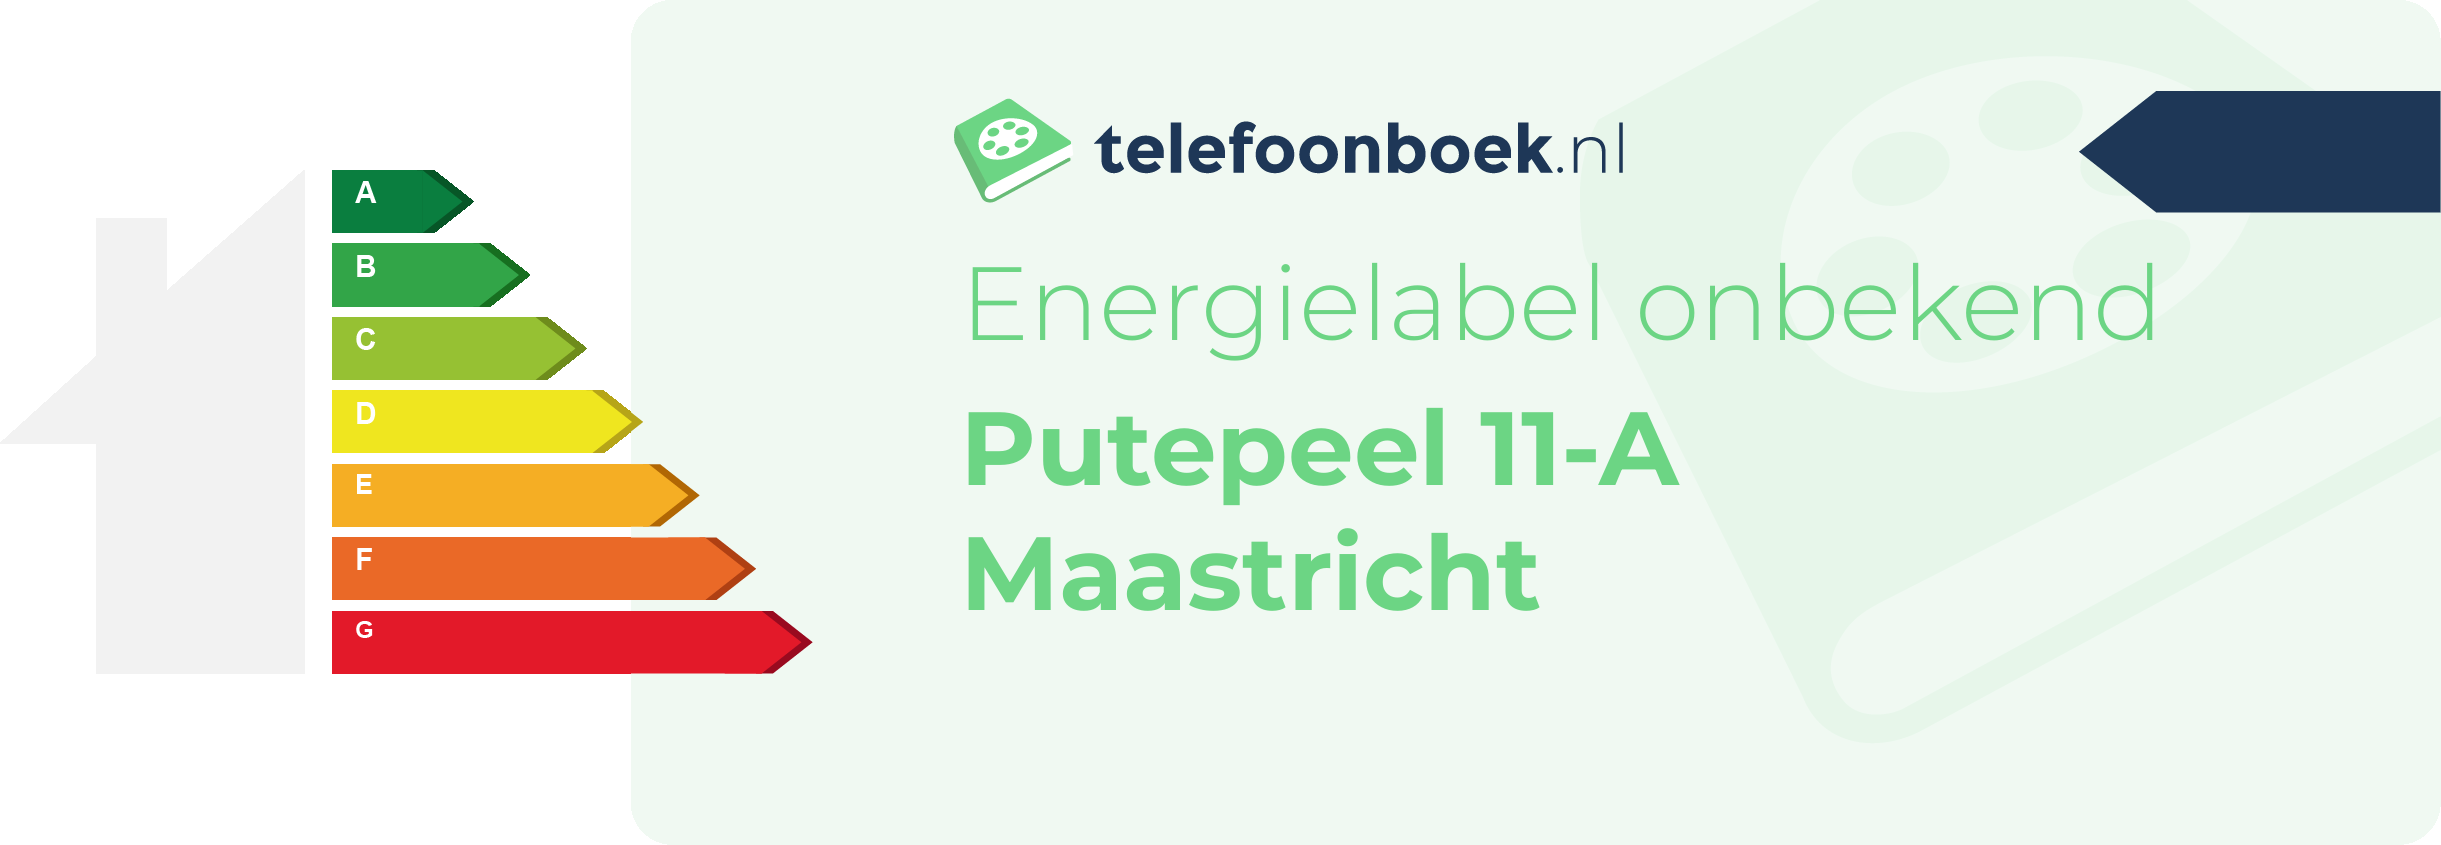 Energielabel Putepeel 11-A Maastricht